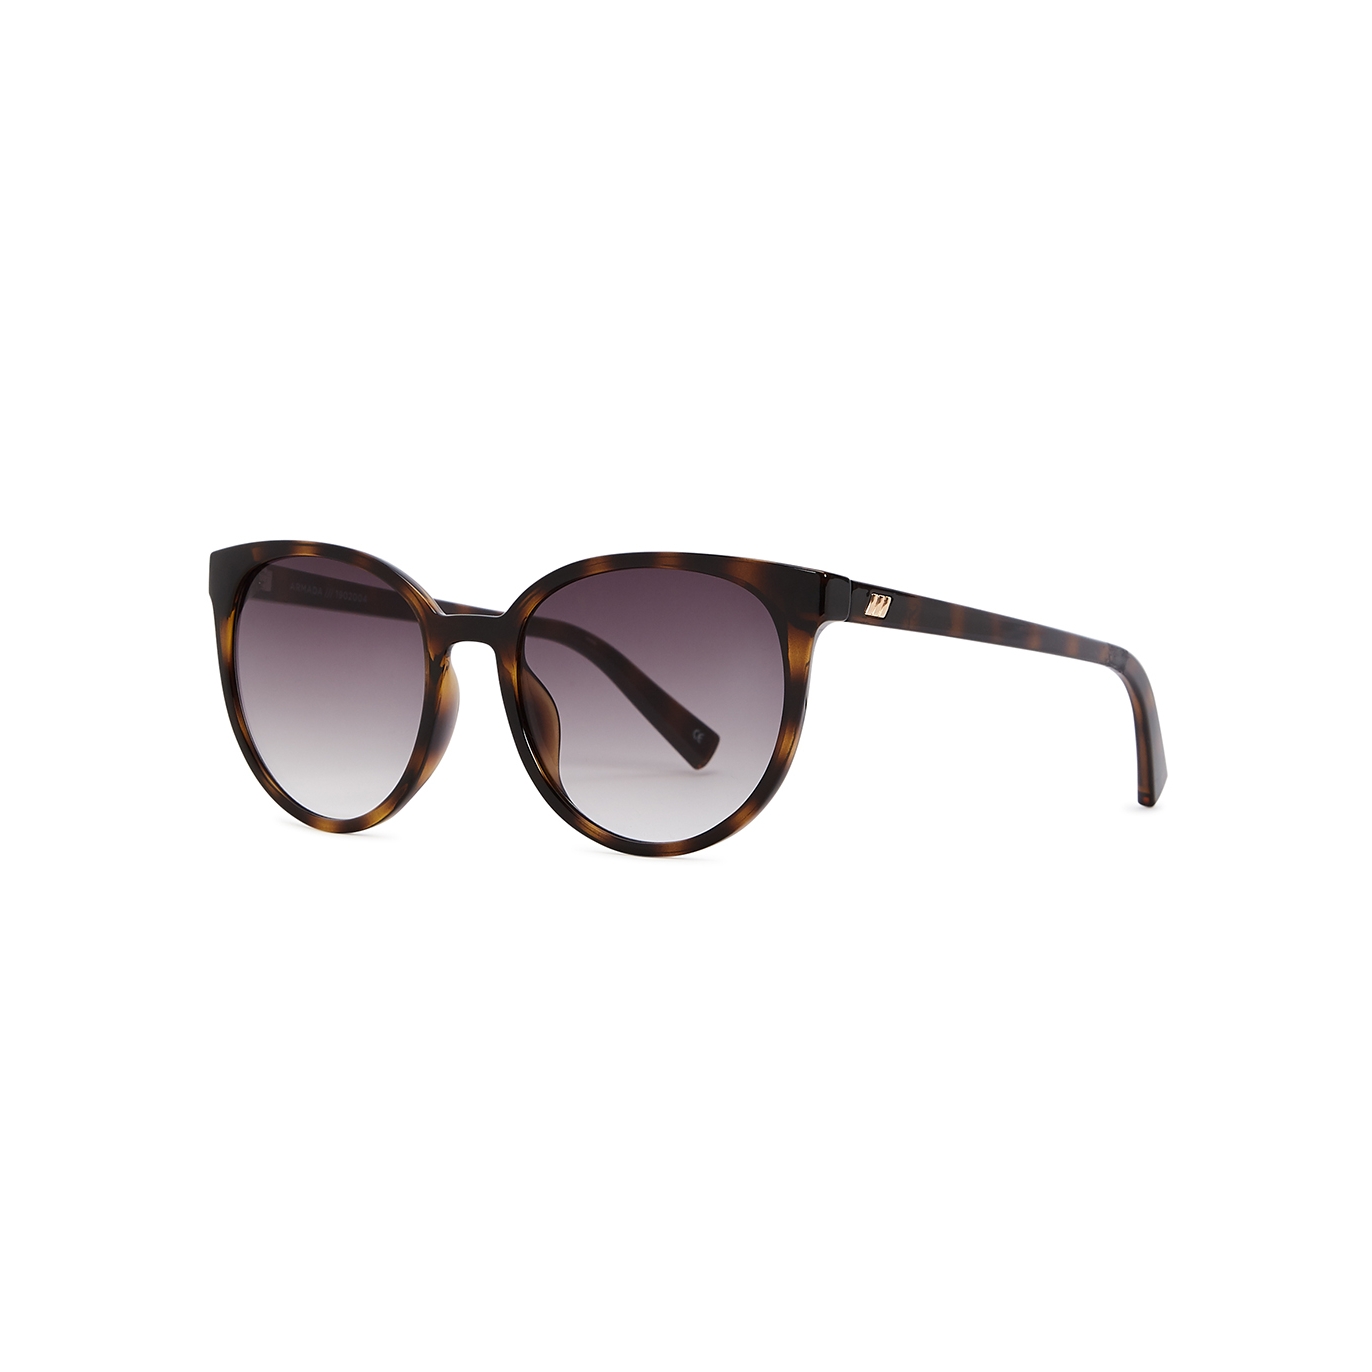 Le Specs Armada Tortoiseshell D-frame Sunglasses, Sunglasses, Brown